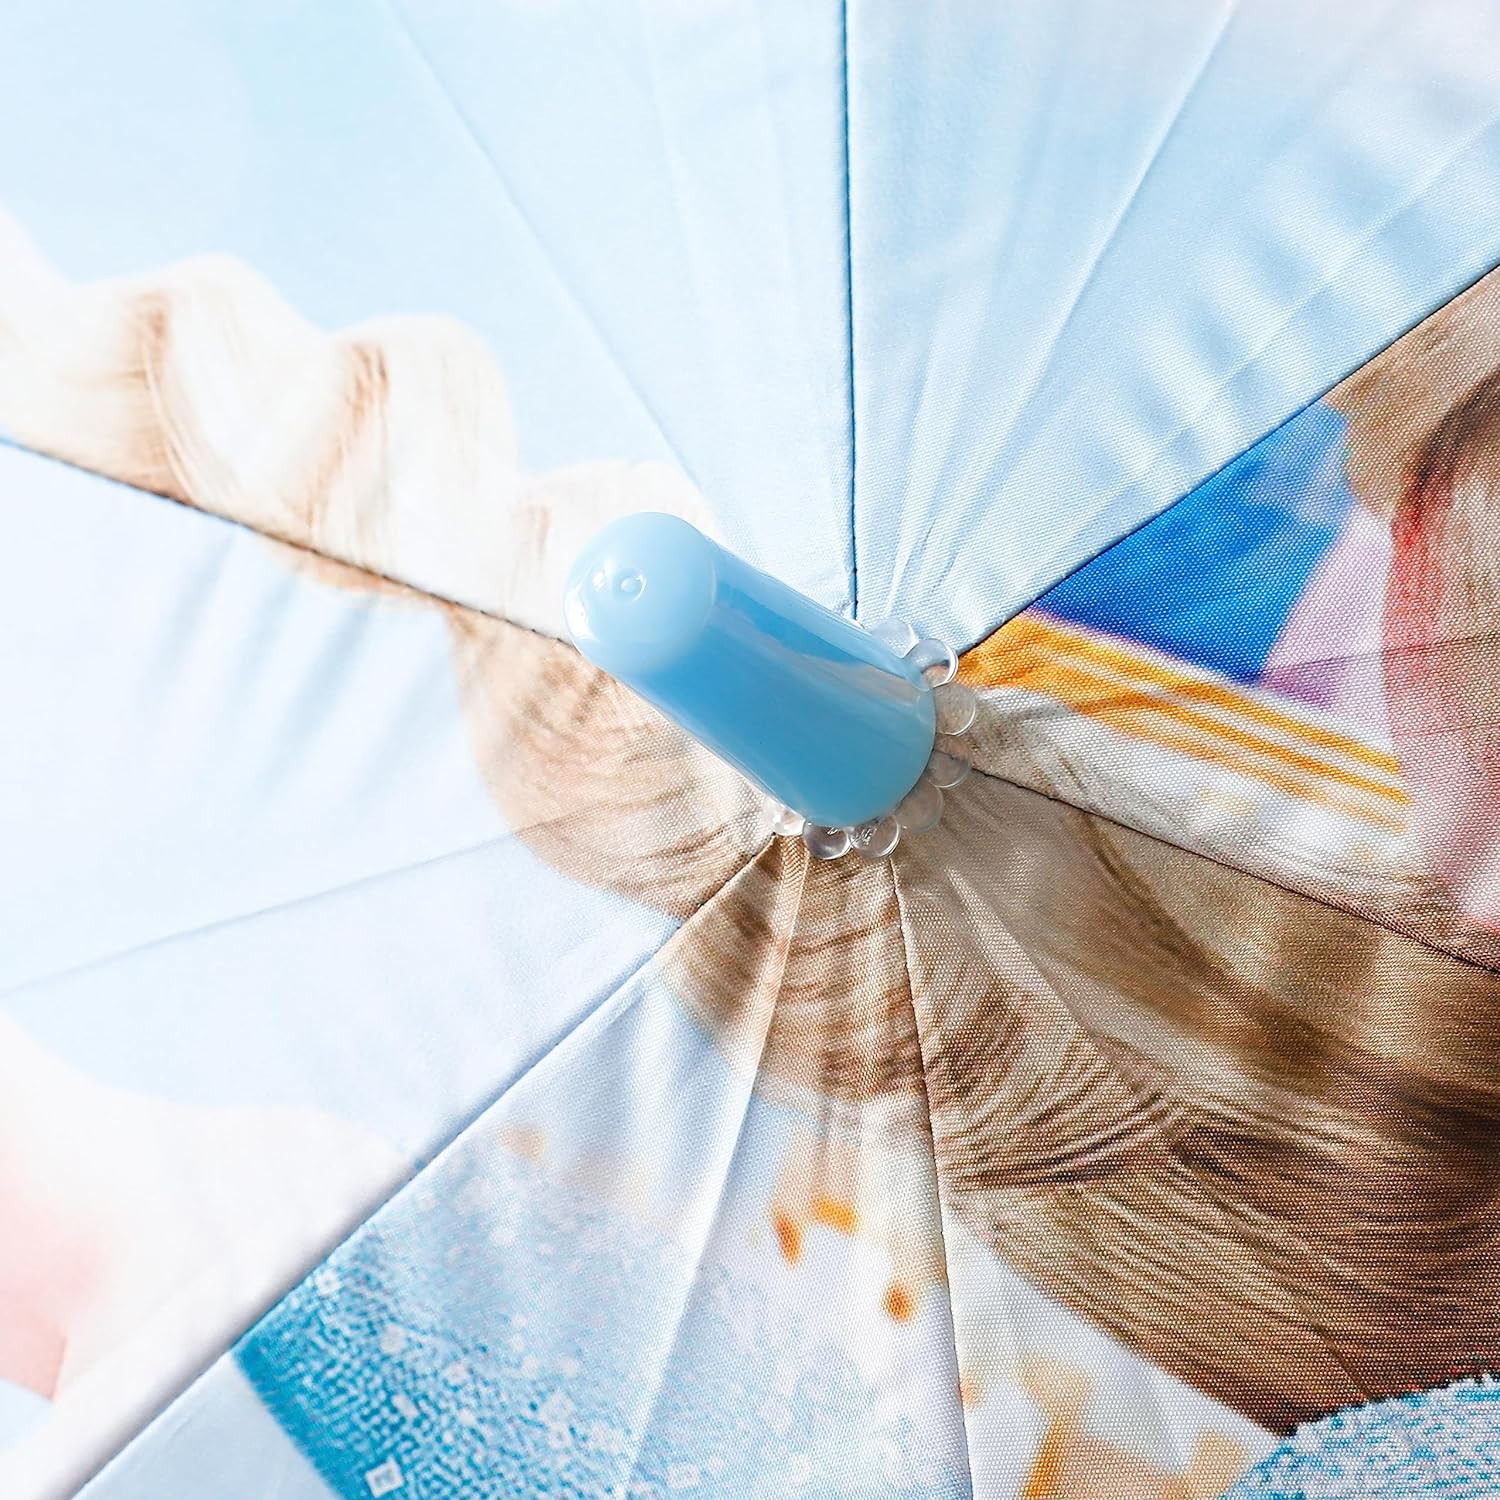 Kuber Industries Disney Frozen Print Umbrella For Kids|Automatic Umbrella For Rain (Sky Blue)